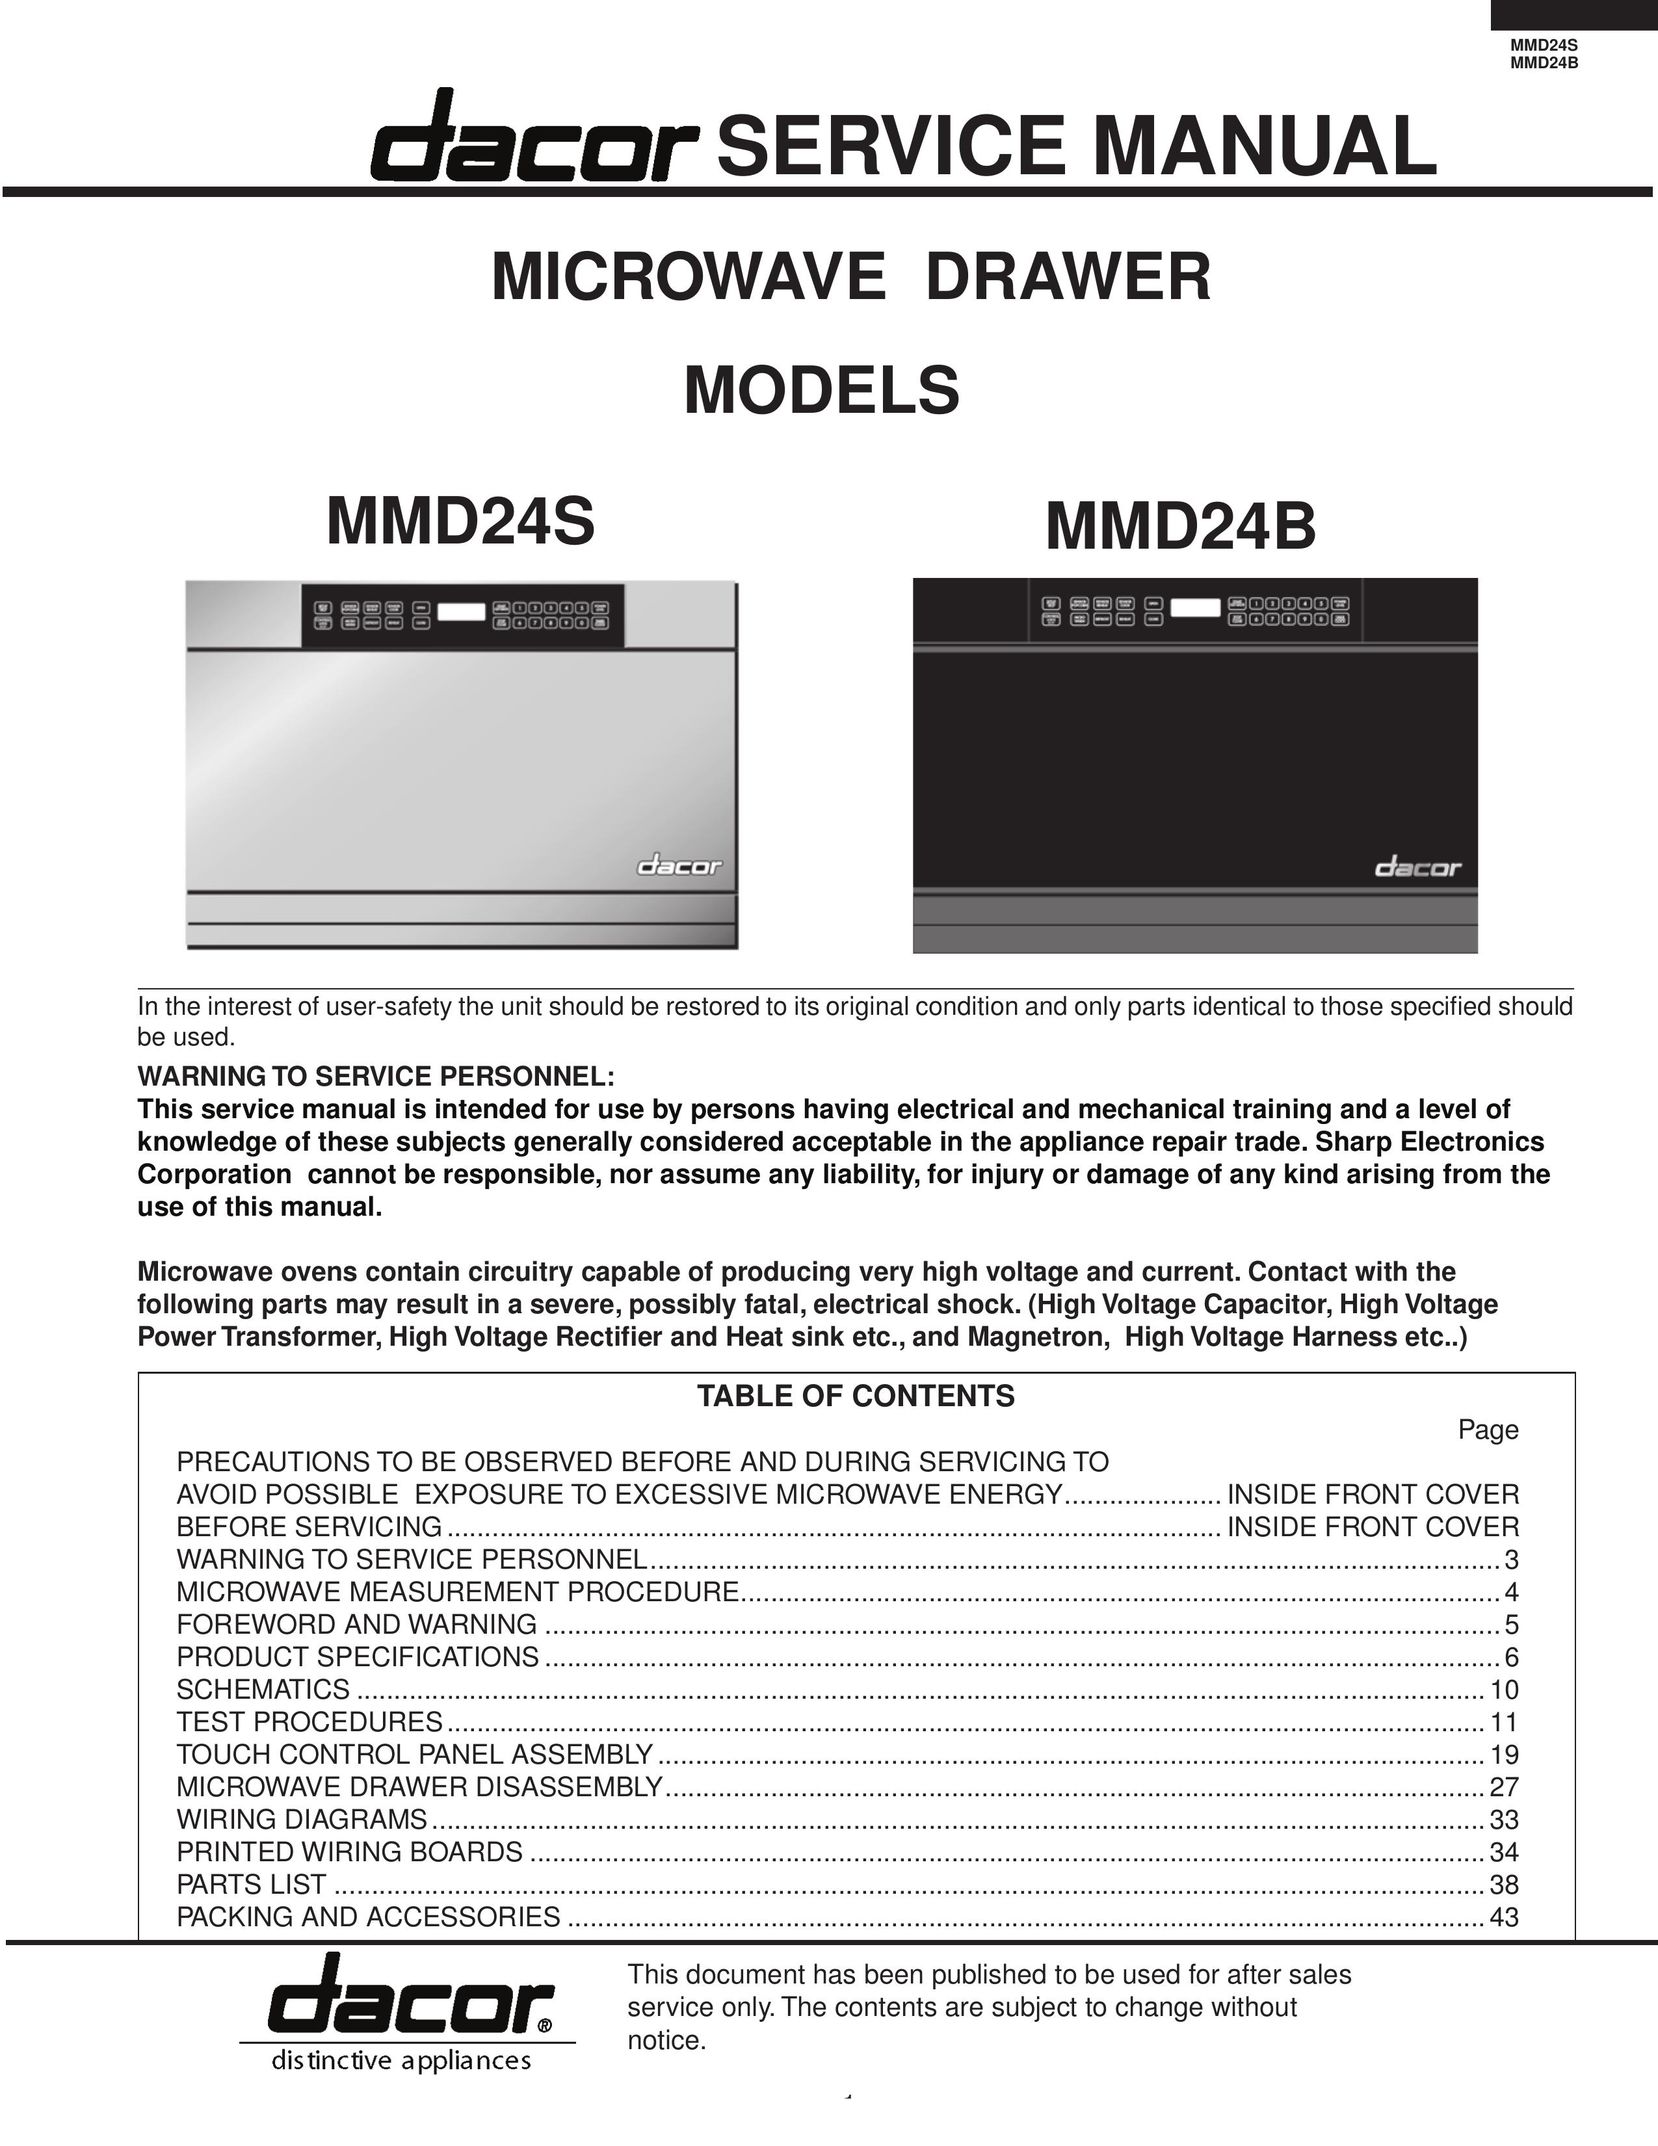 Sharp MMD24B Microwave Oven User Manual